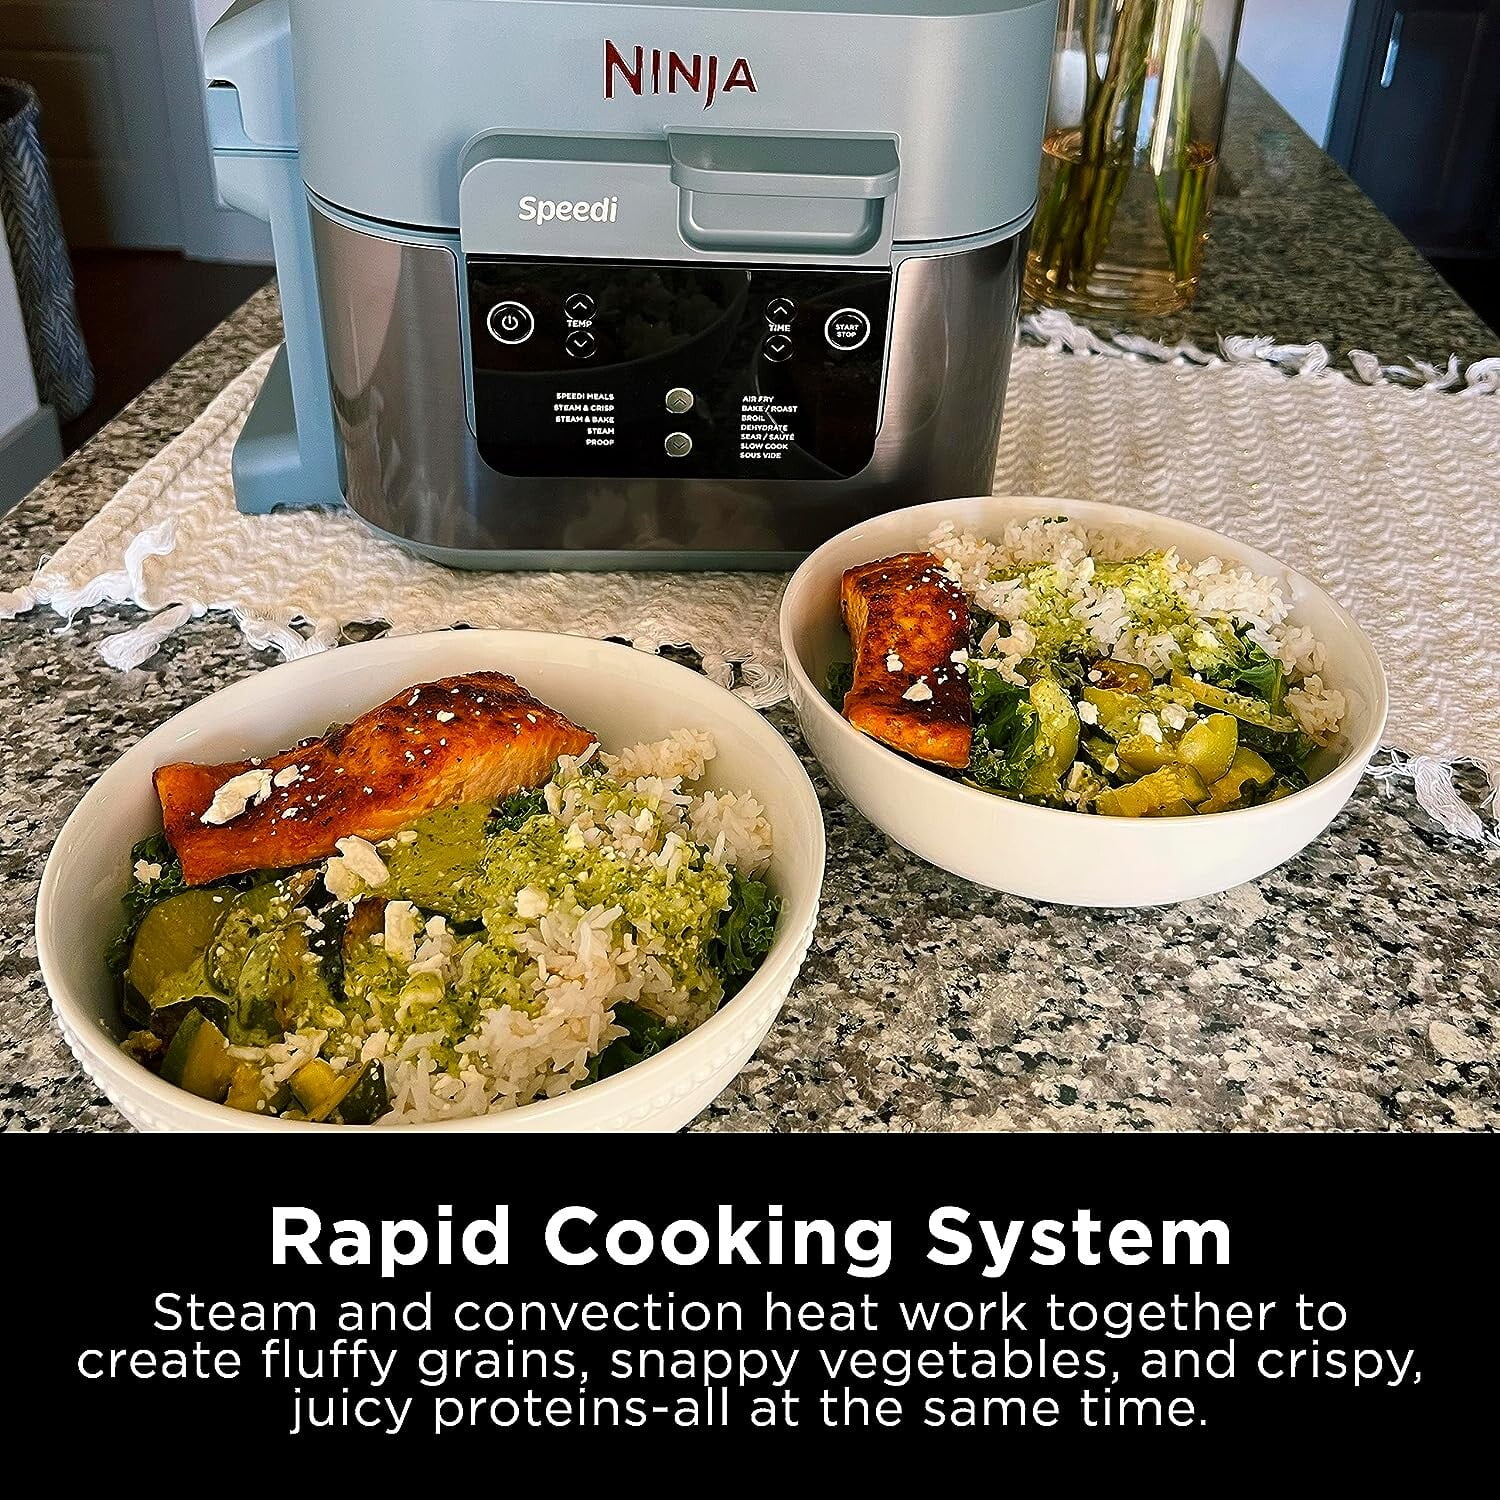 Ninja Speedi Rapid Cooker & Air Fryer 302A 6-Qt Capacity 11-in-1